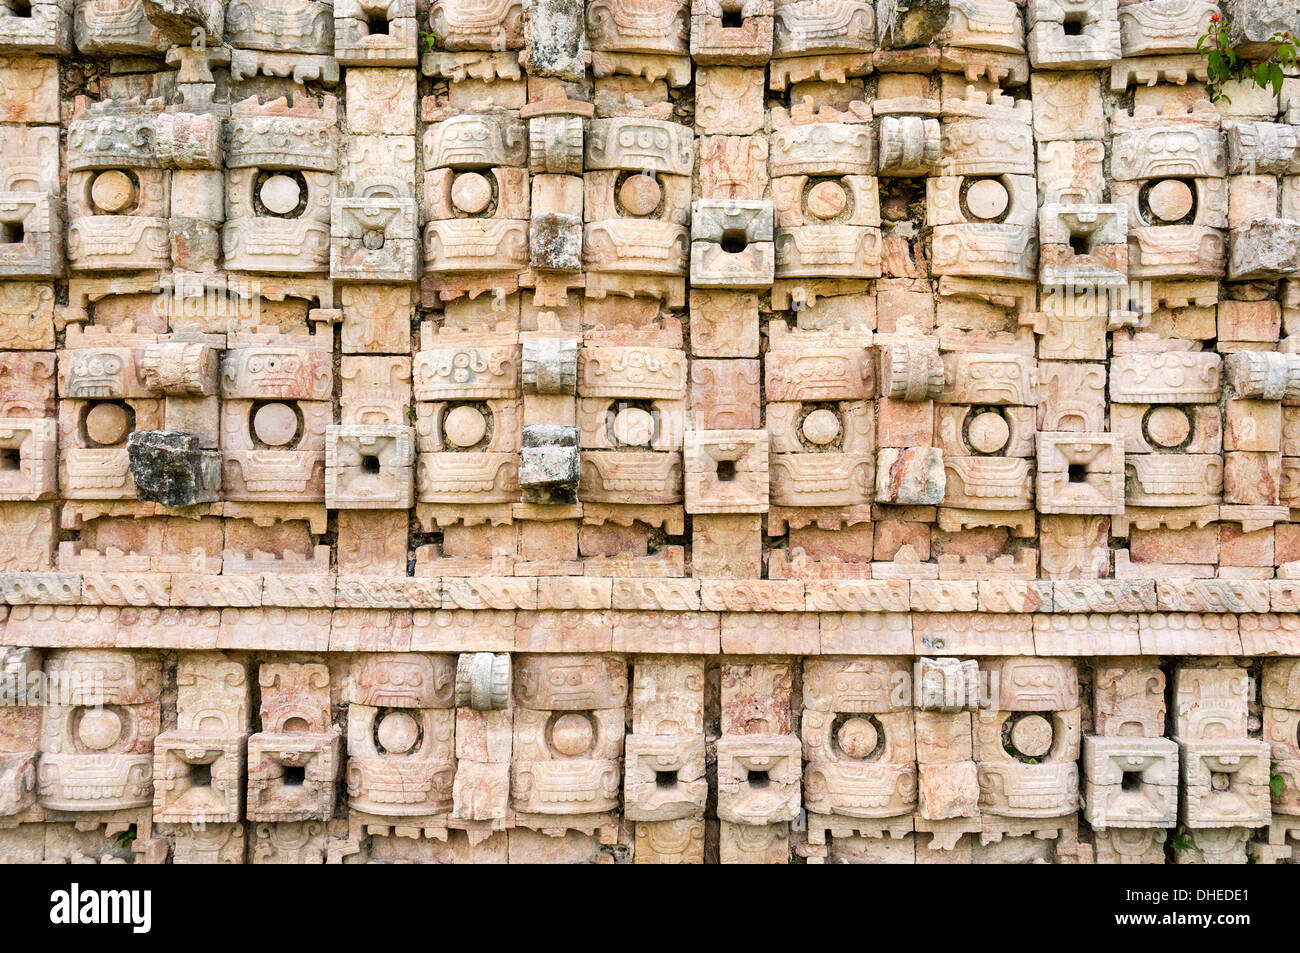 Nahaufnahme von der Wand an den Maya-Ruinen im El Palacio de Los Mascarones (Palast der Masken), Kabah, Yucatan, Mexiko, Nordamerika Stockfoto